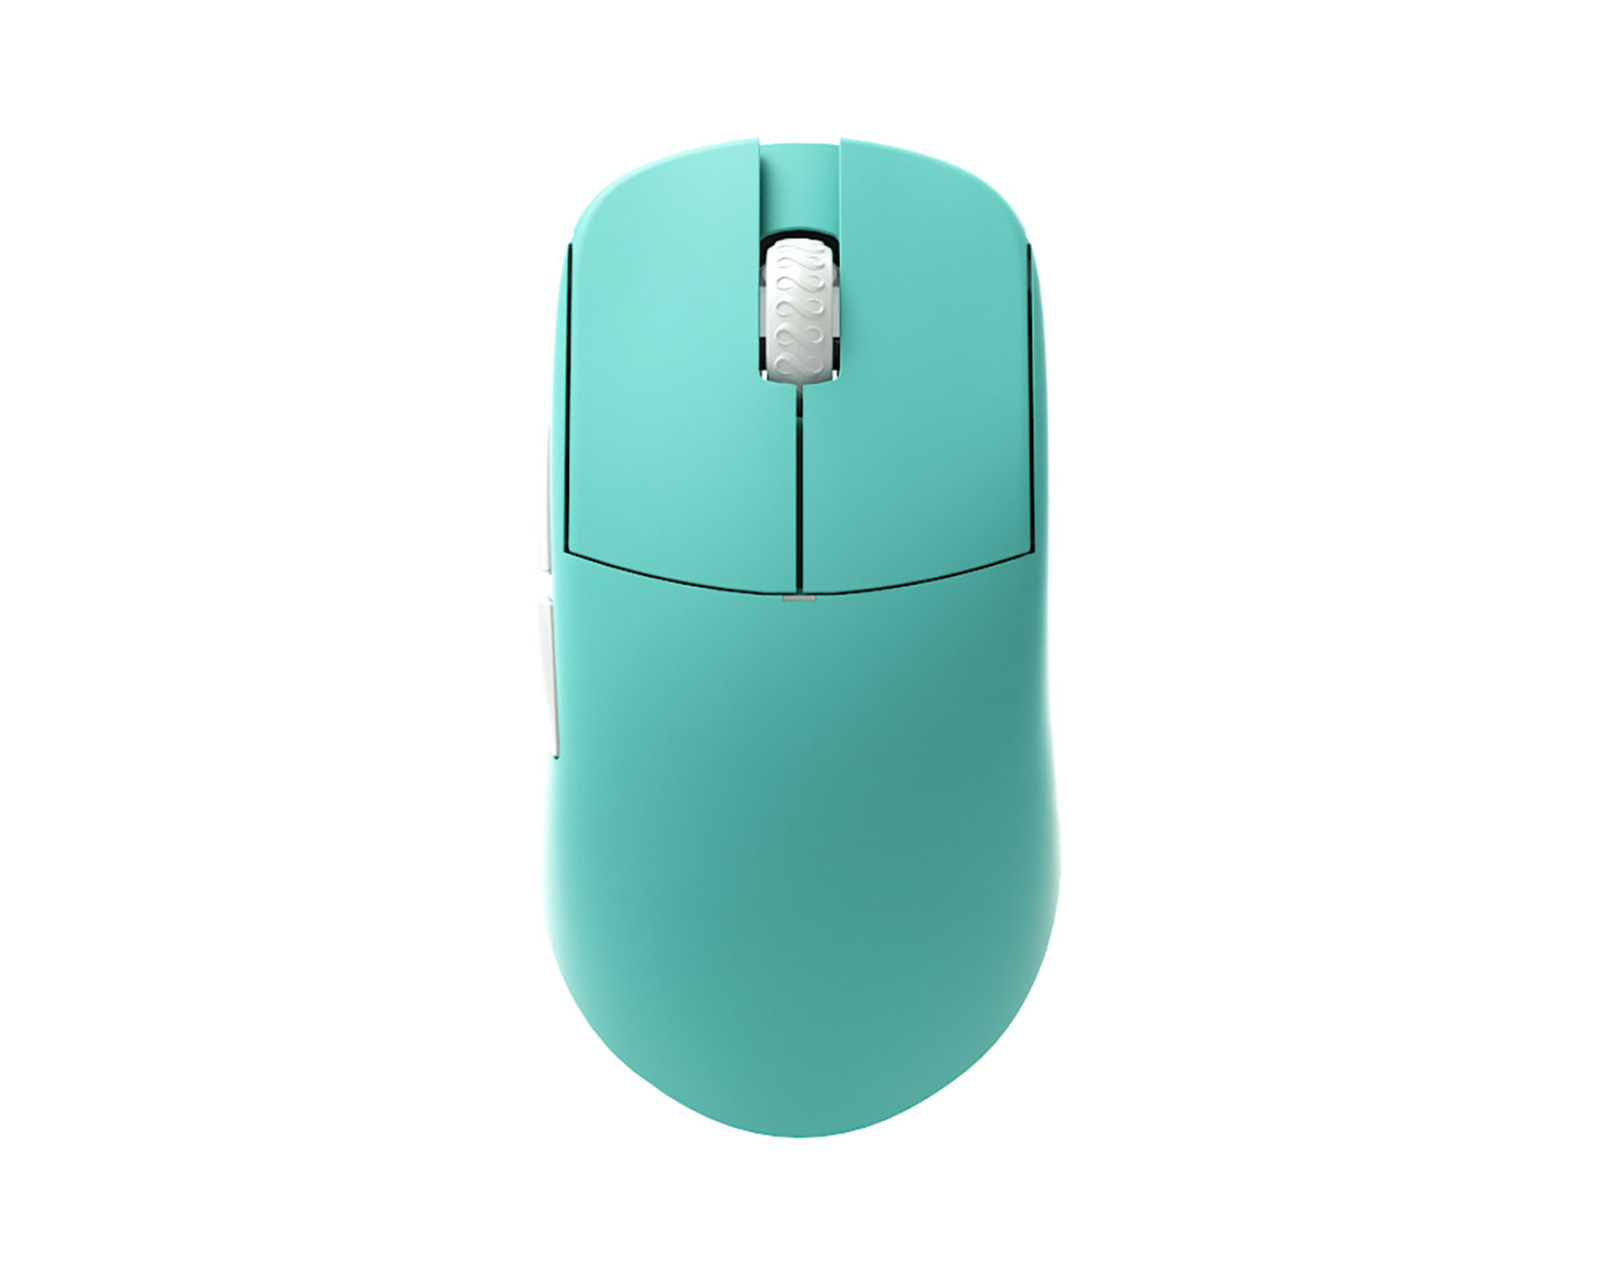 Lamzu Atlantis Mini Pro Wireless Superlight Gaming Mouse - Elegant